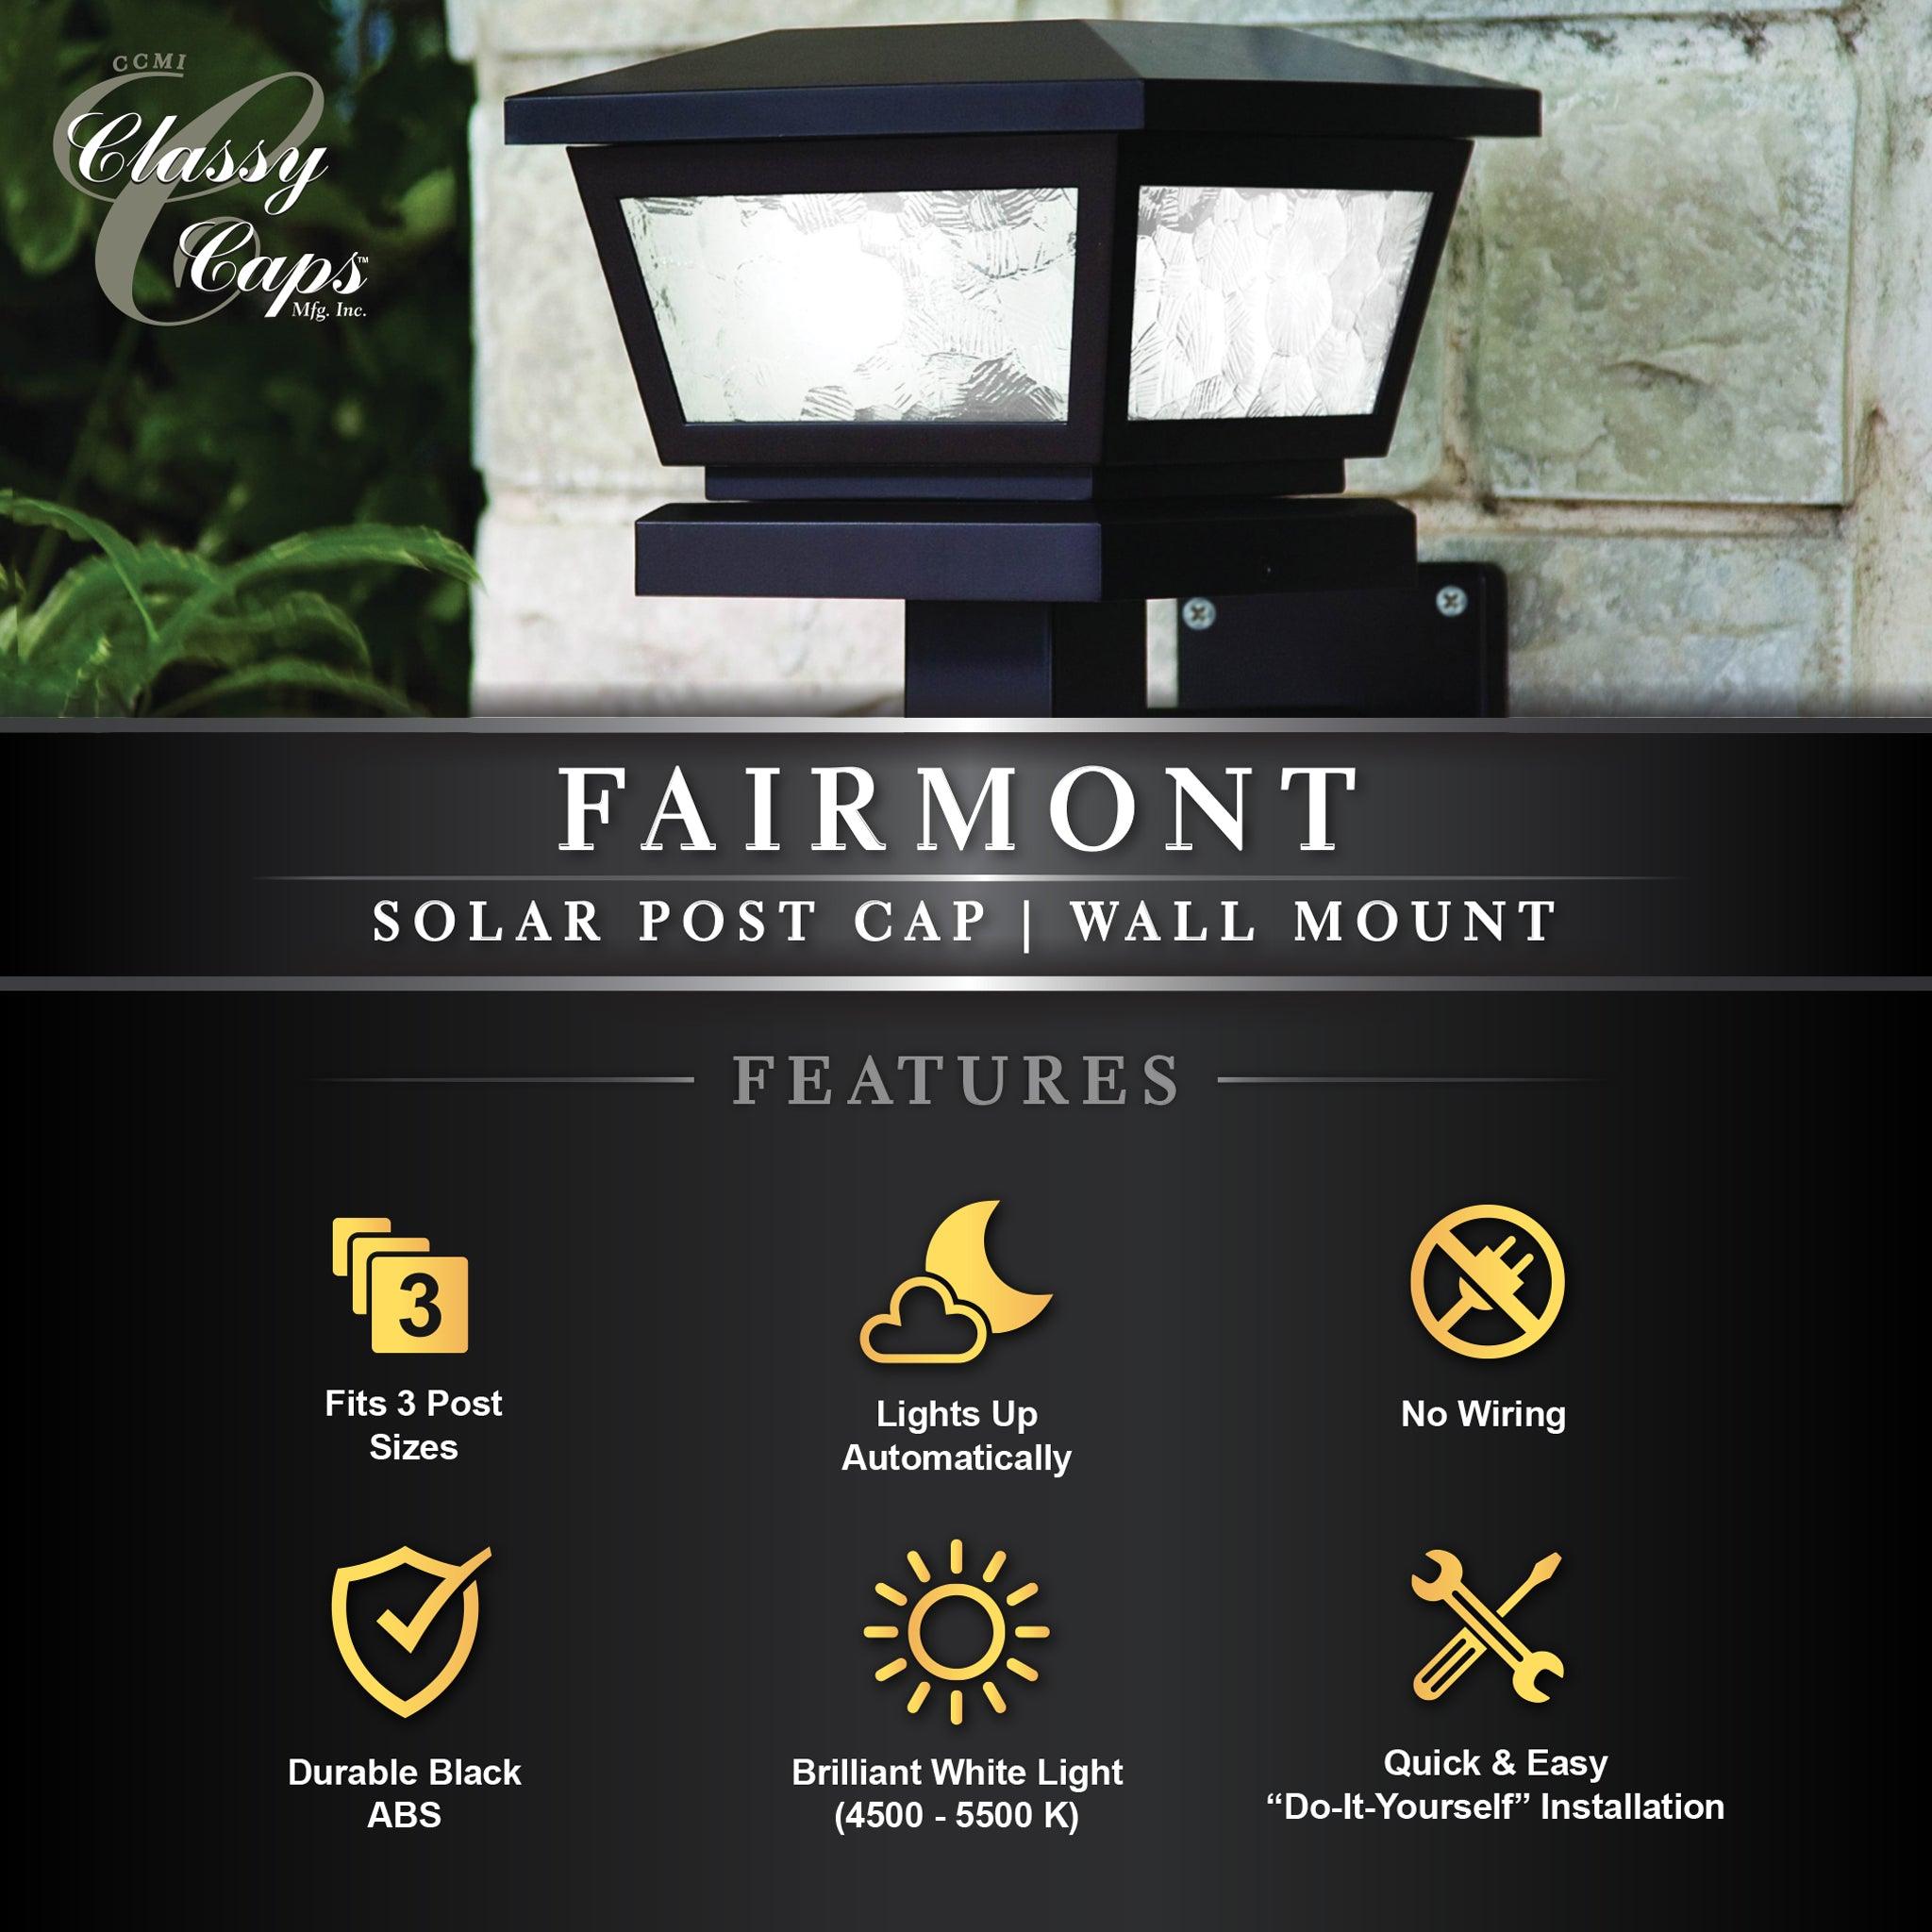 Fairmont Solar Post Cap/ Wall Mount - Black - Classy Caps Mfg. Inc.